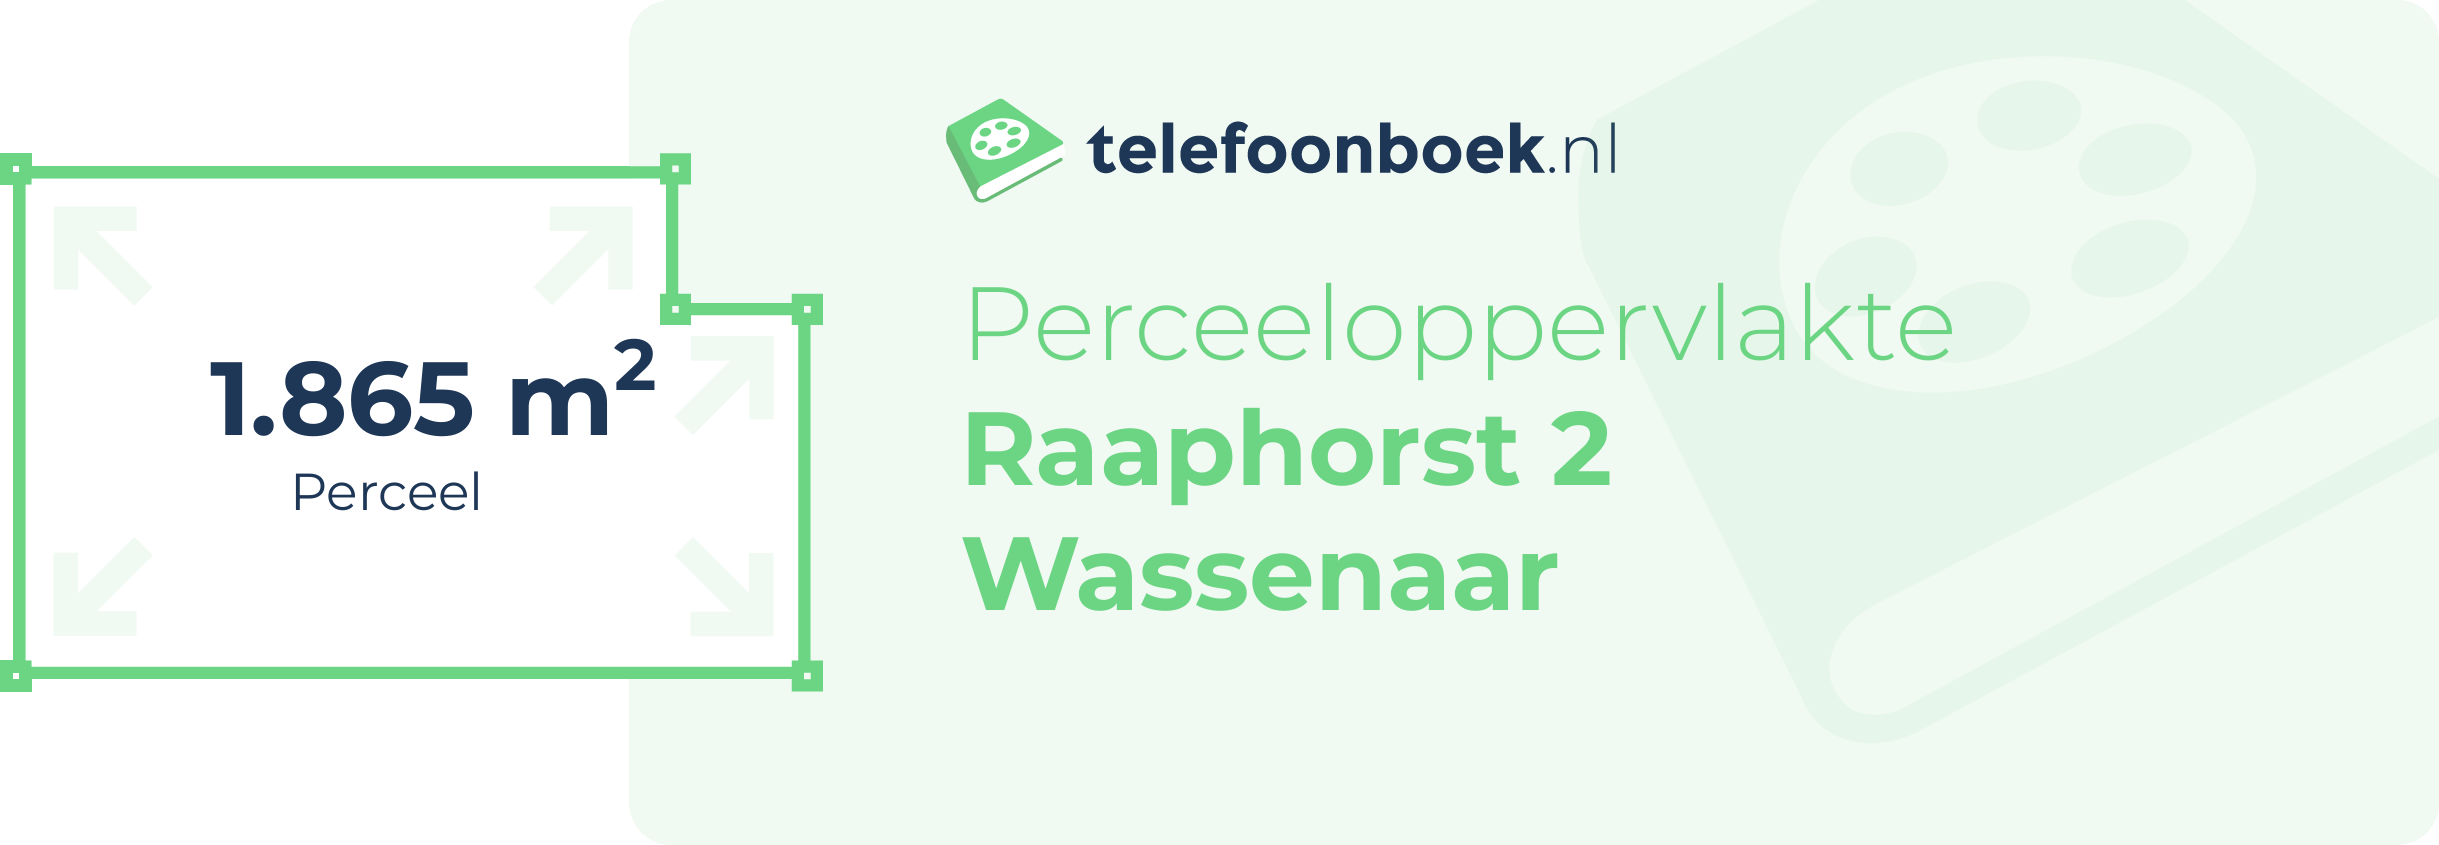 Perceeloppervlakte Raaphorst 2 Wassenaar